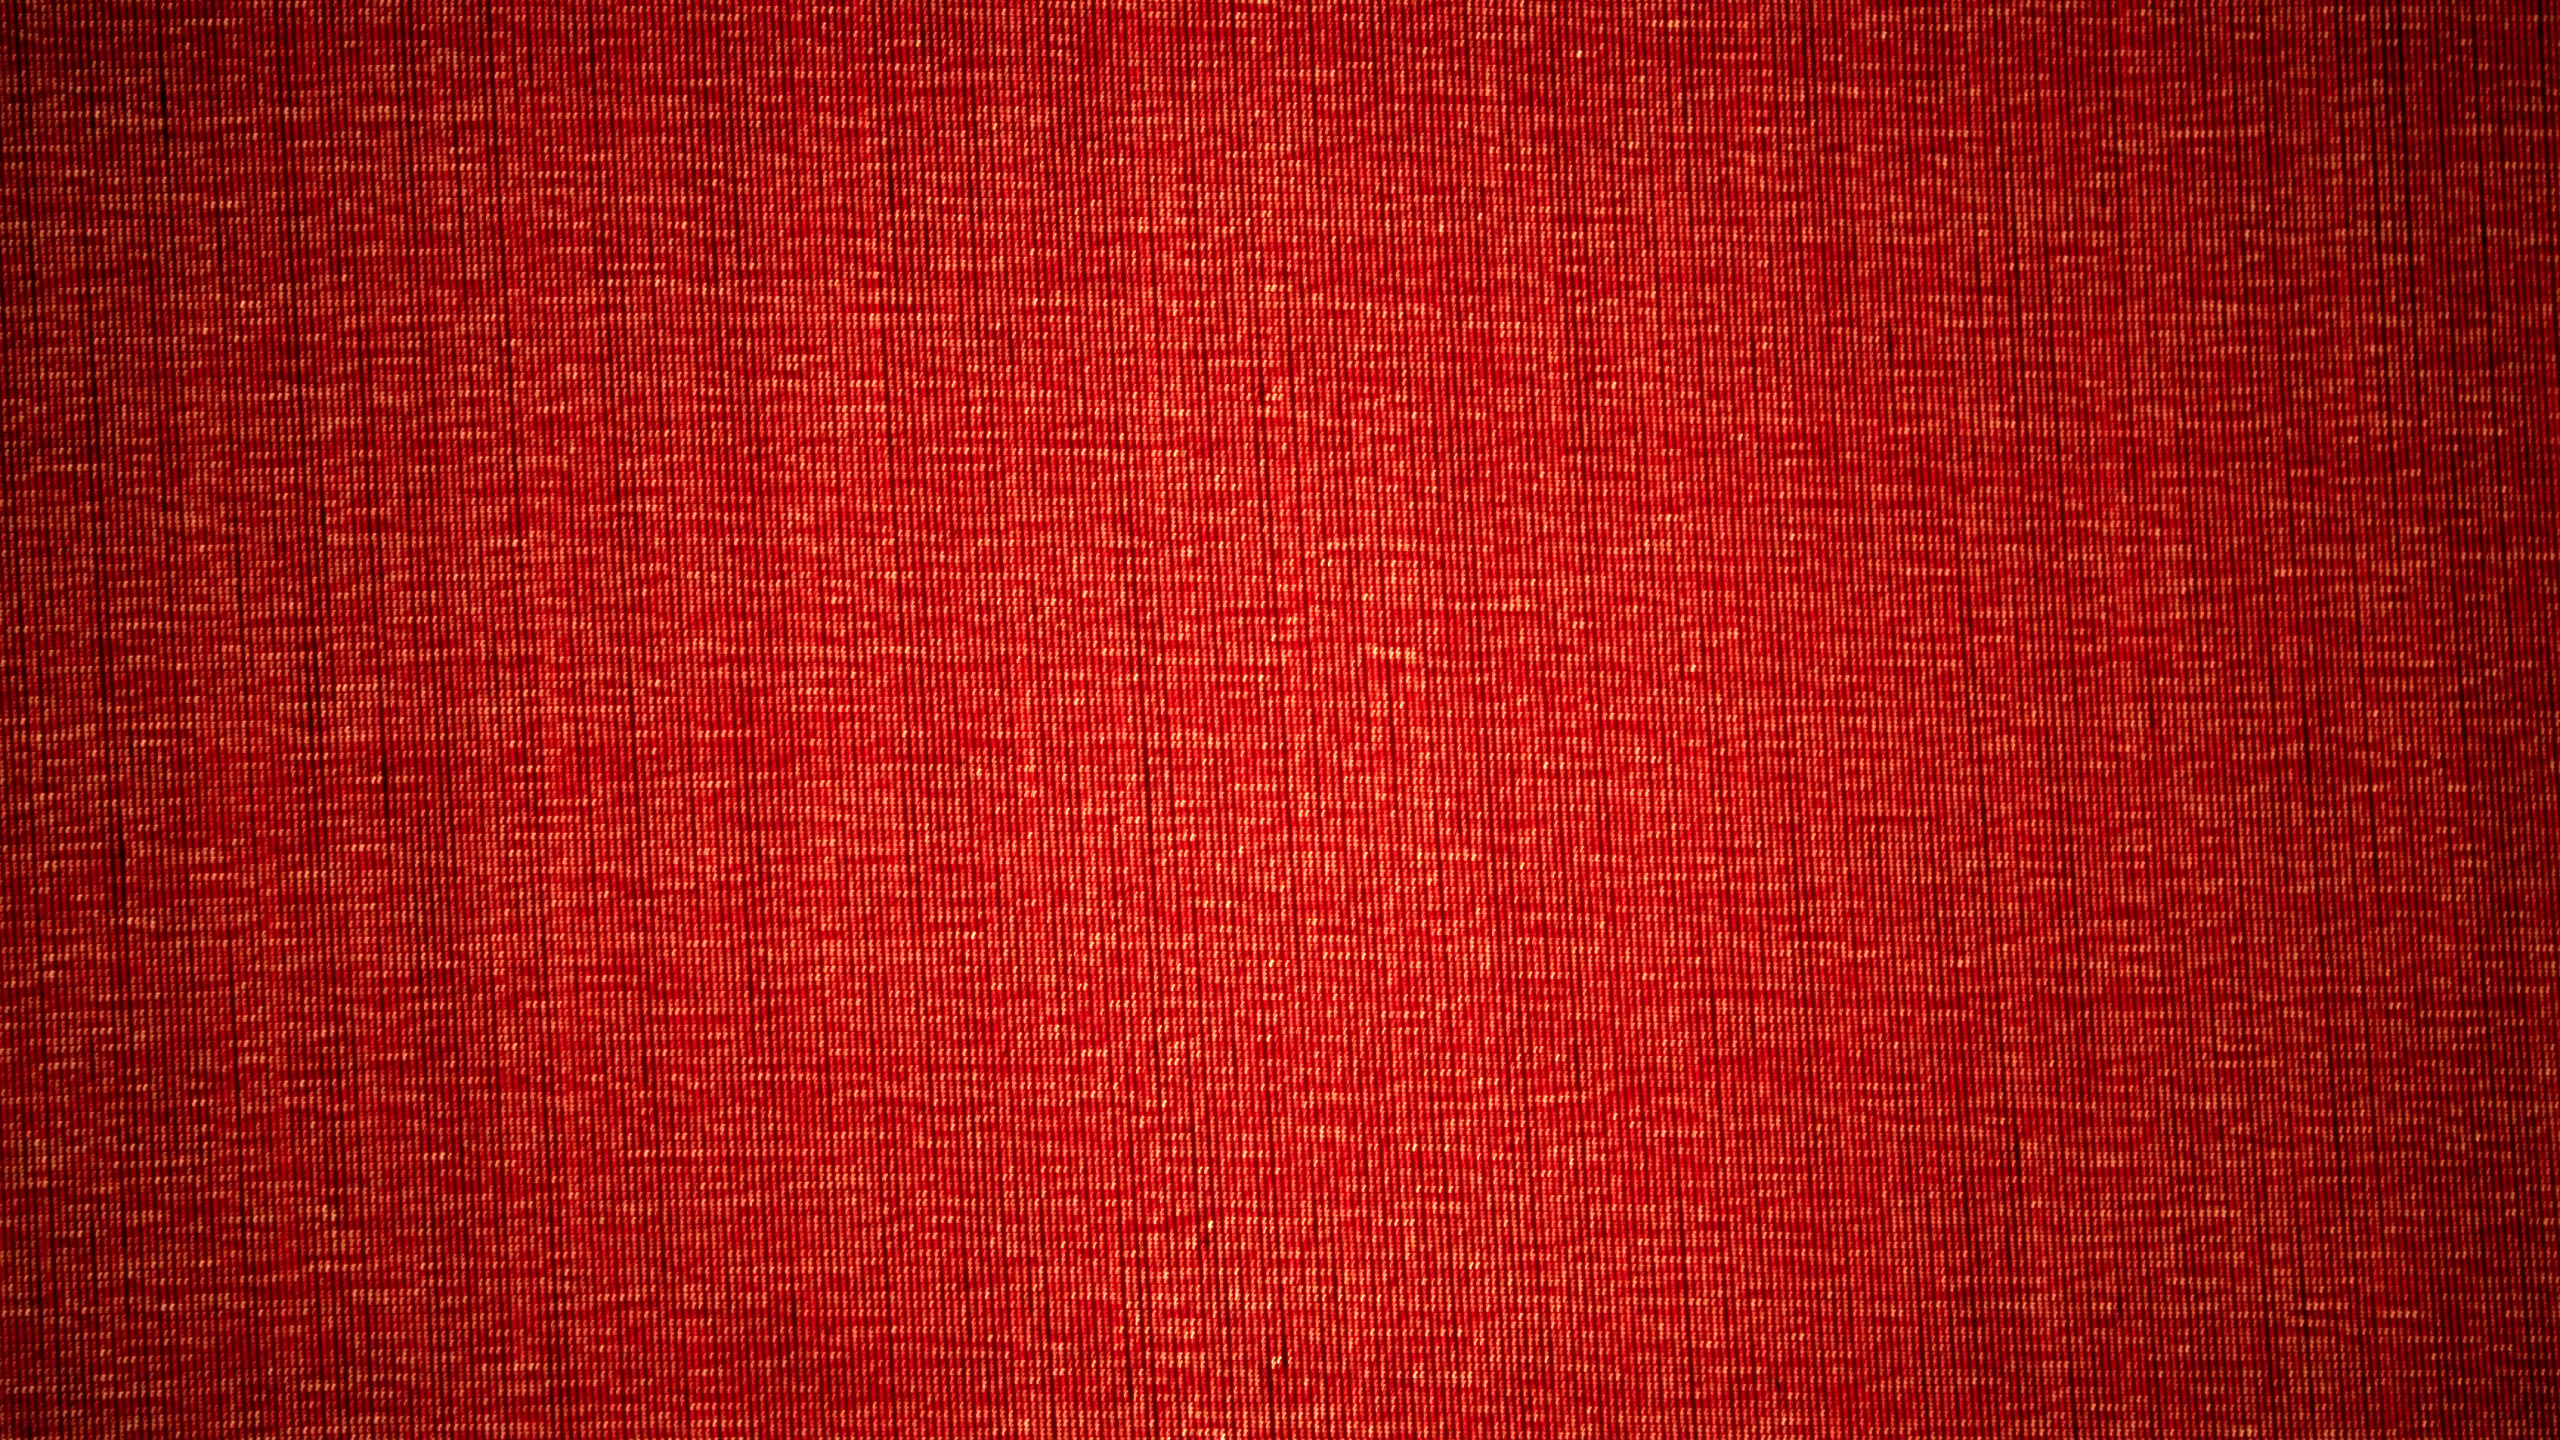 Textil Rojo en la Imagen de Cerca. Wallpaper in 2560x1440 Resolution